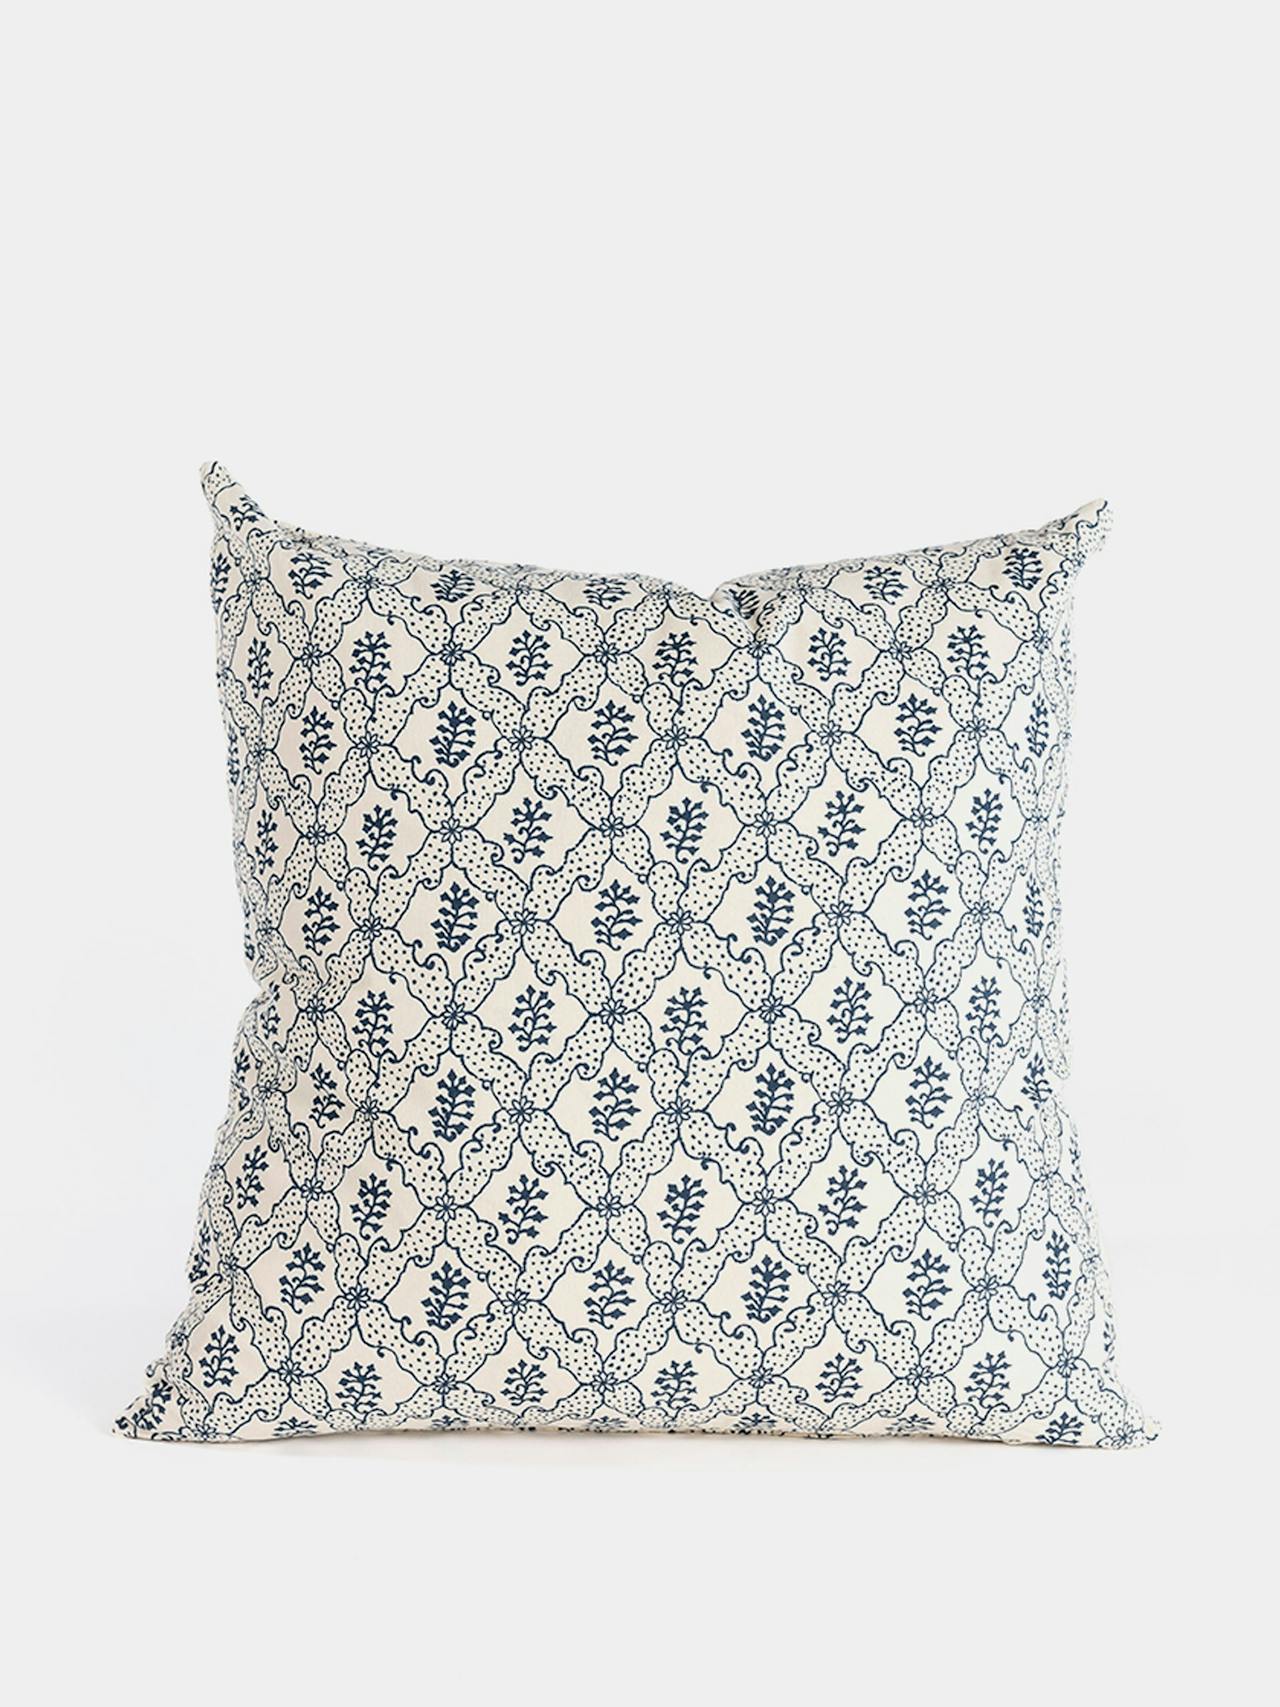 Lattice flower scatter cushion in indigo